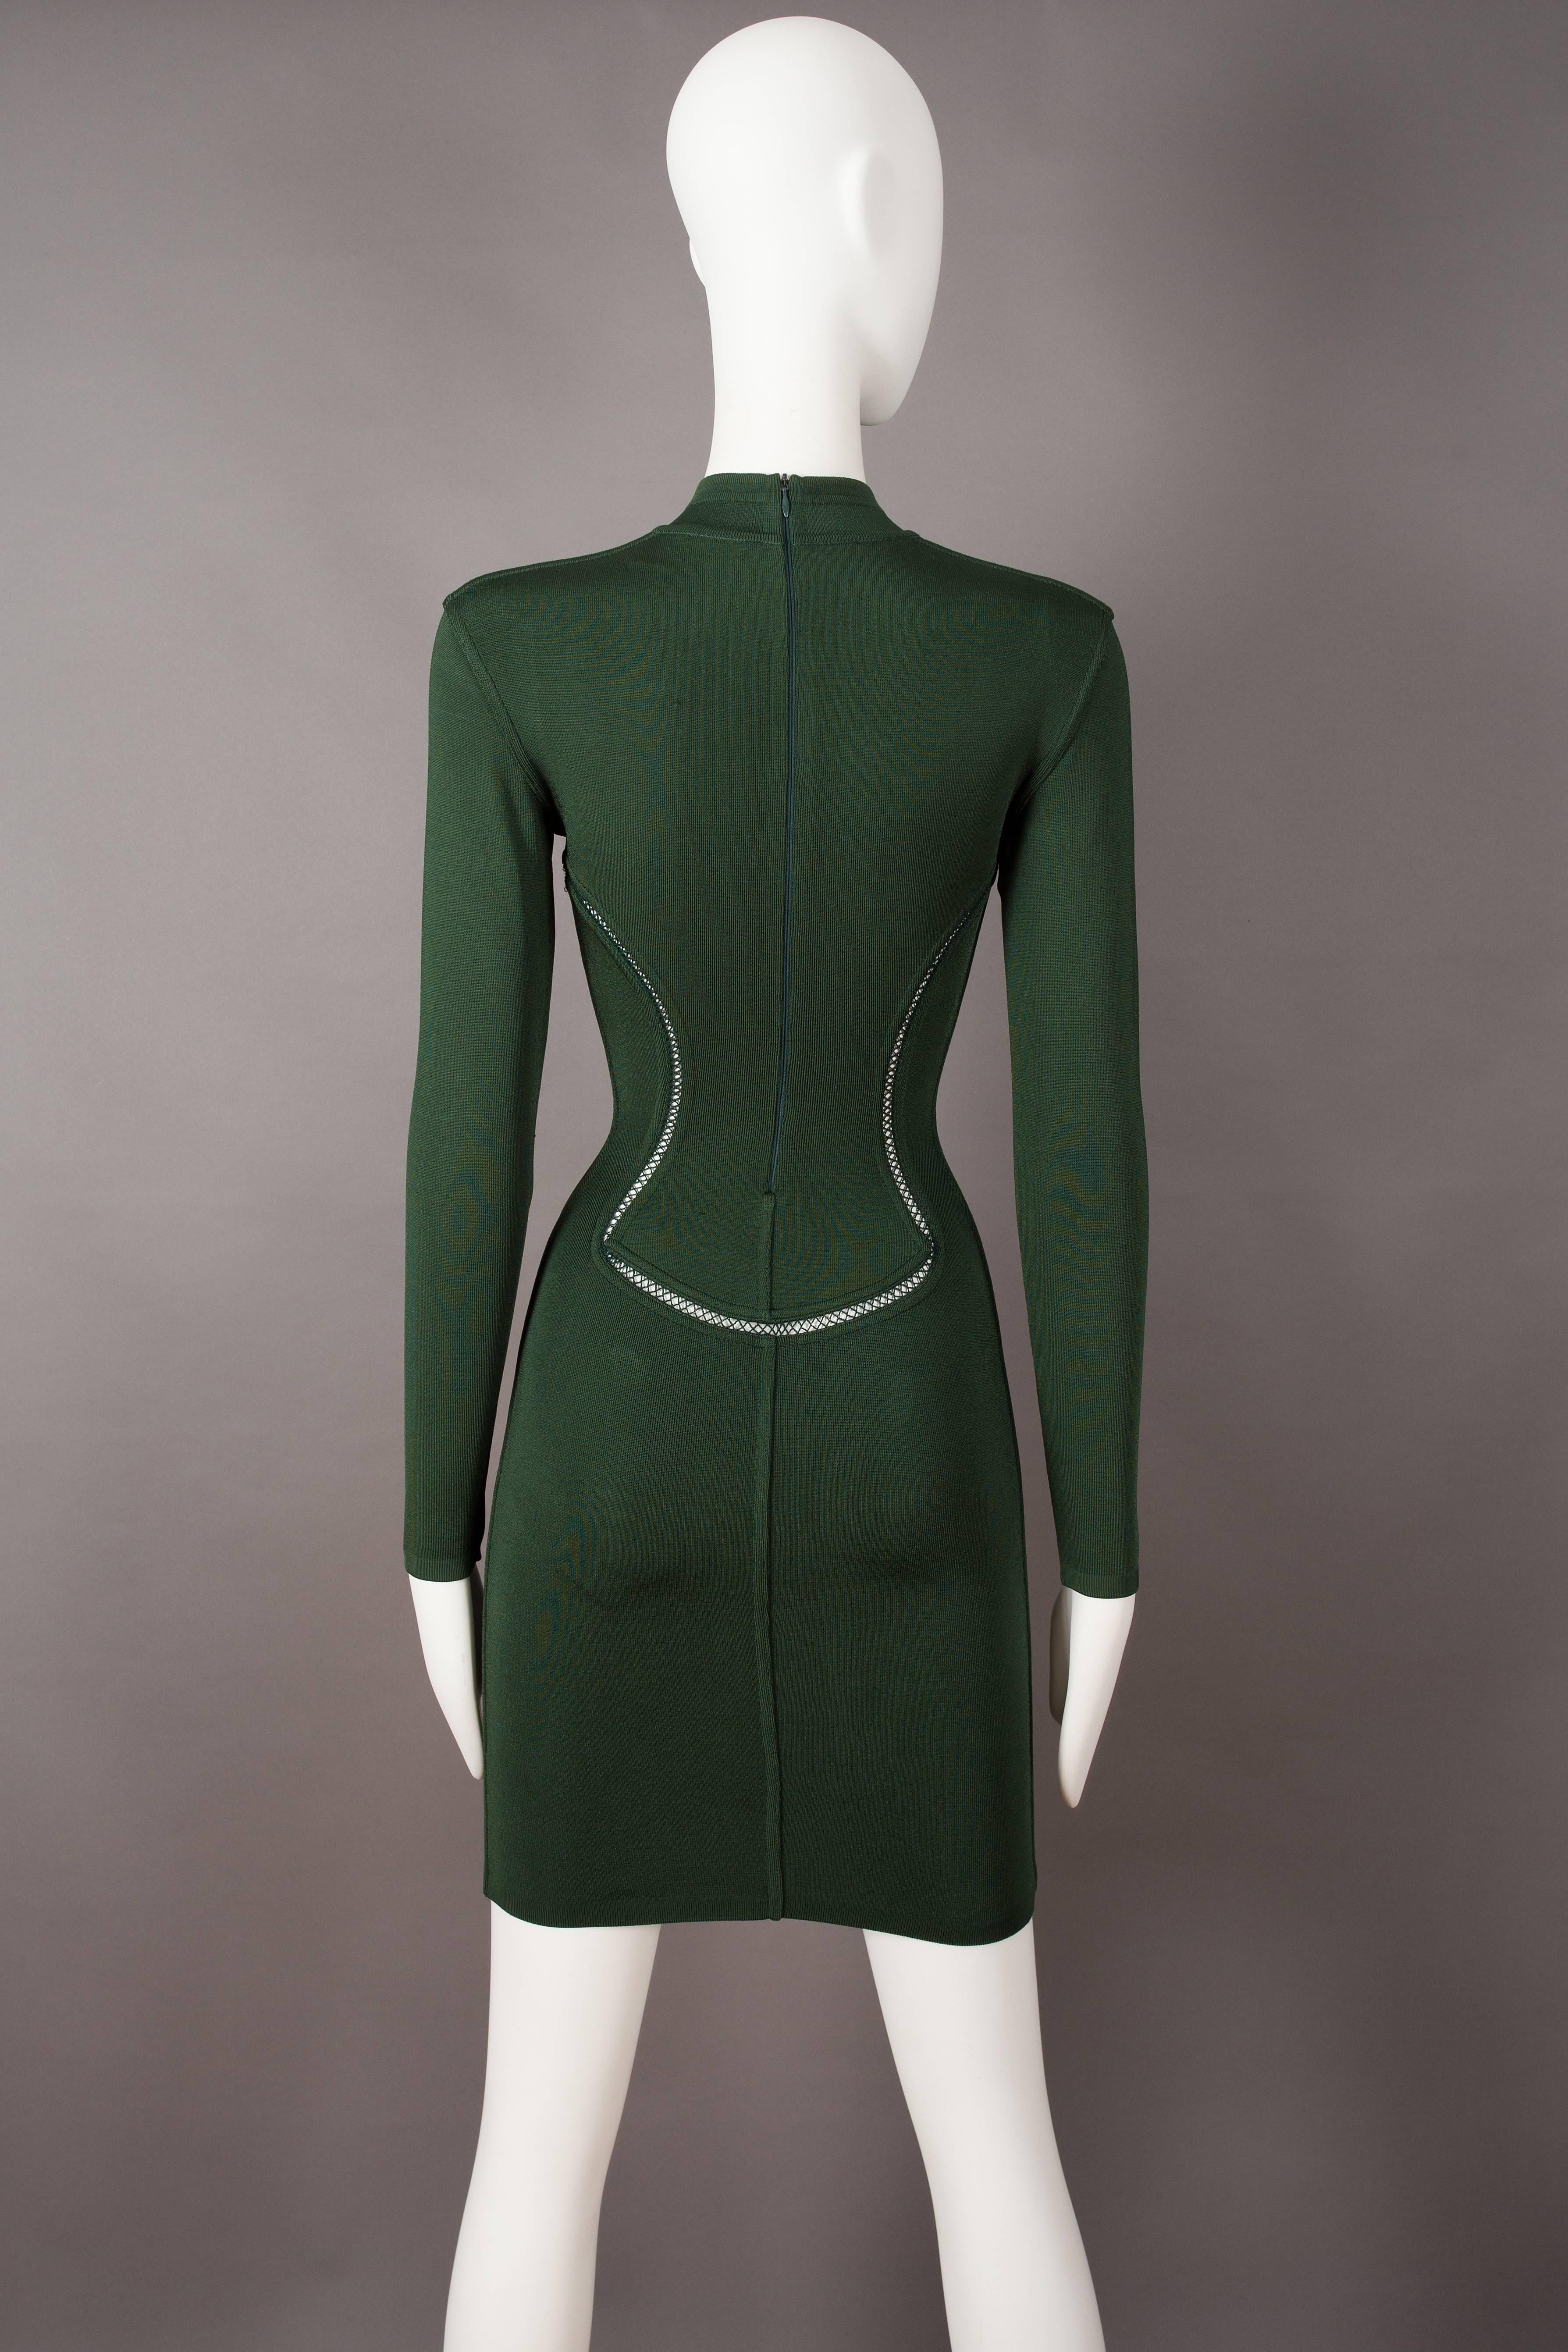 Women's Alaia emerald green bodycon mini dress, circa 1991